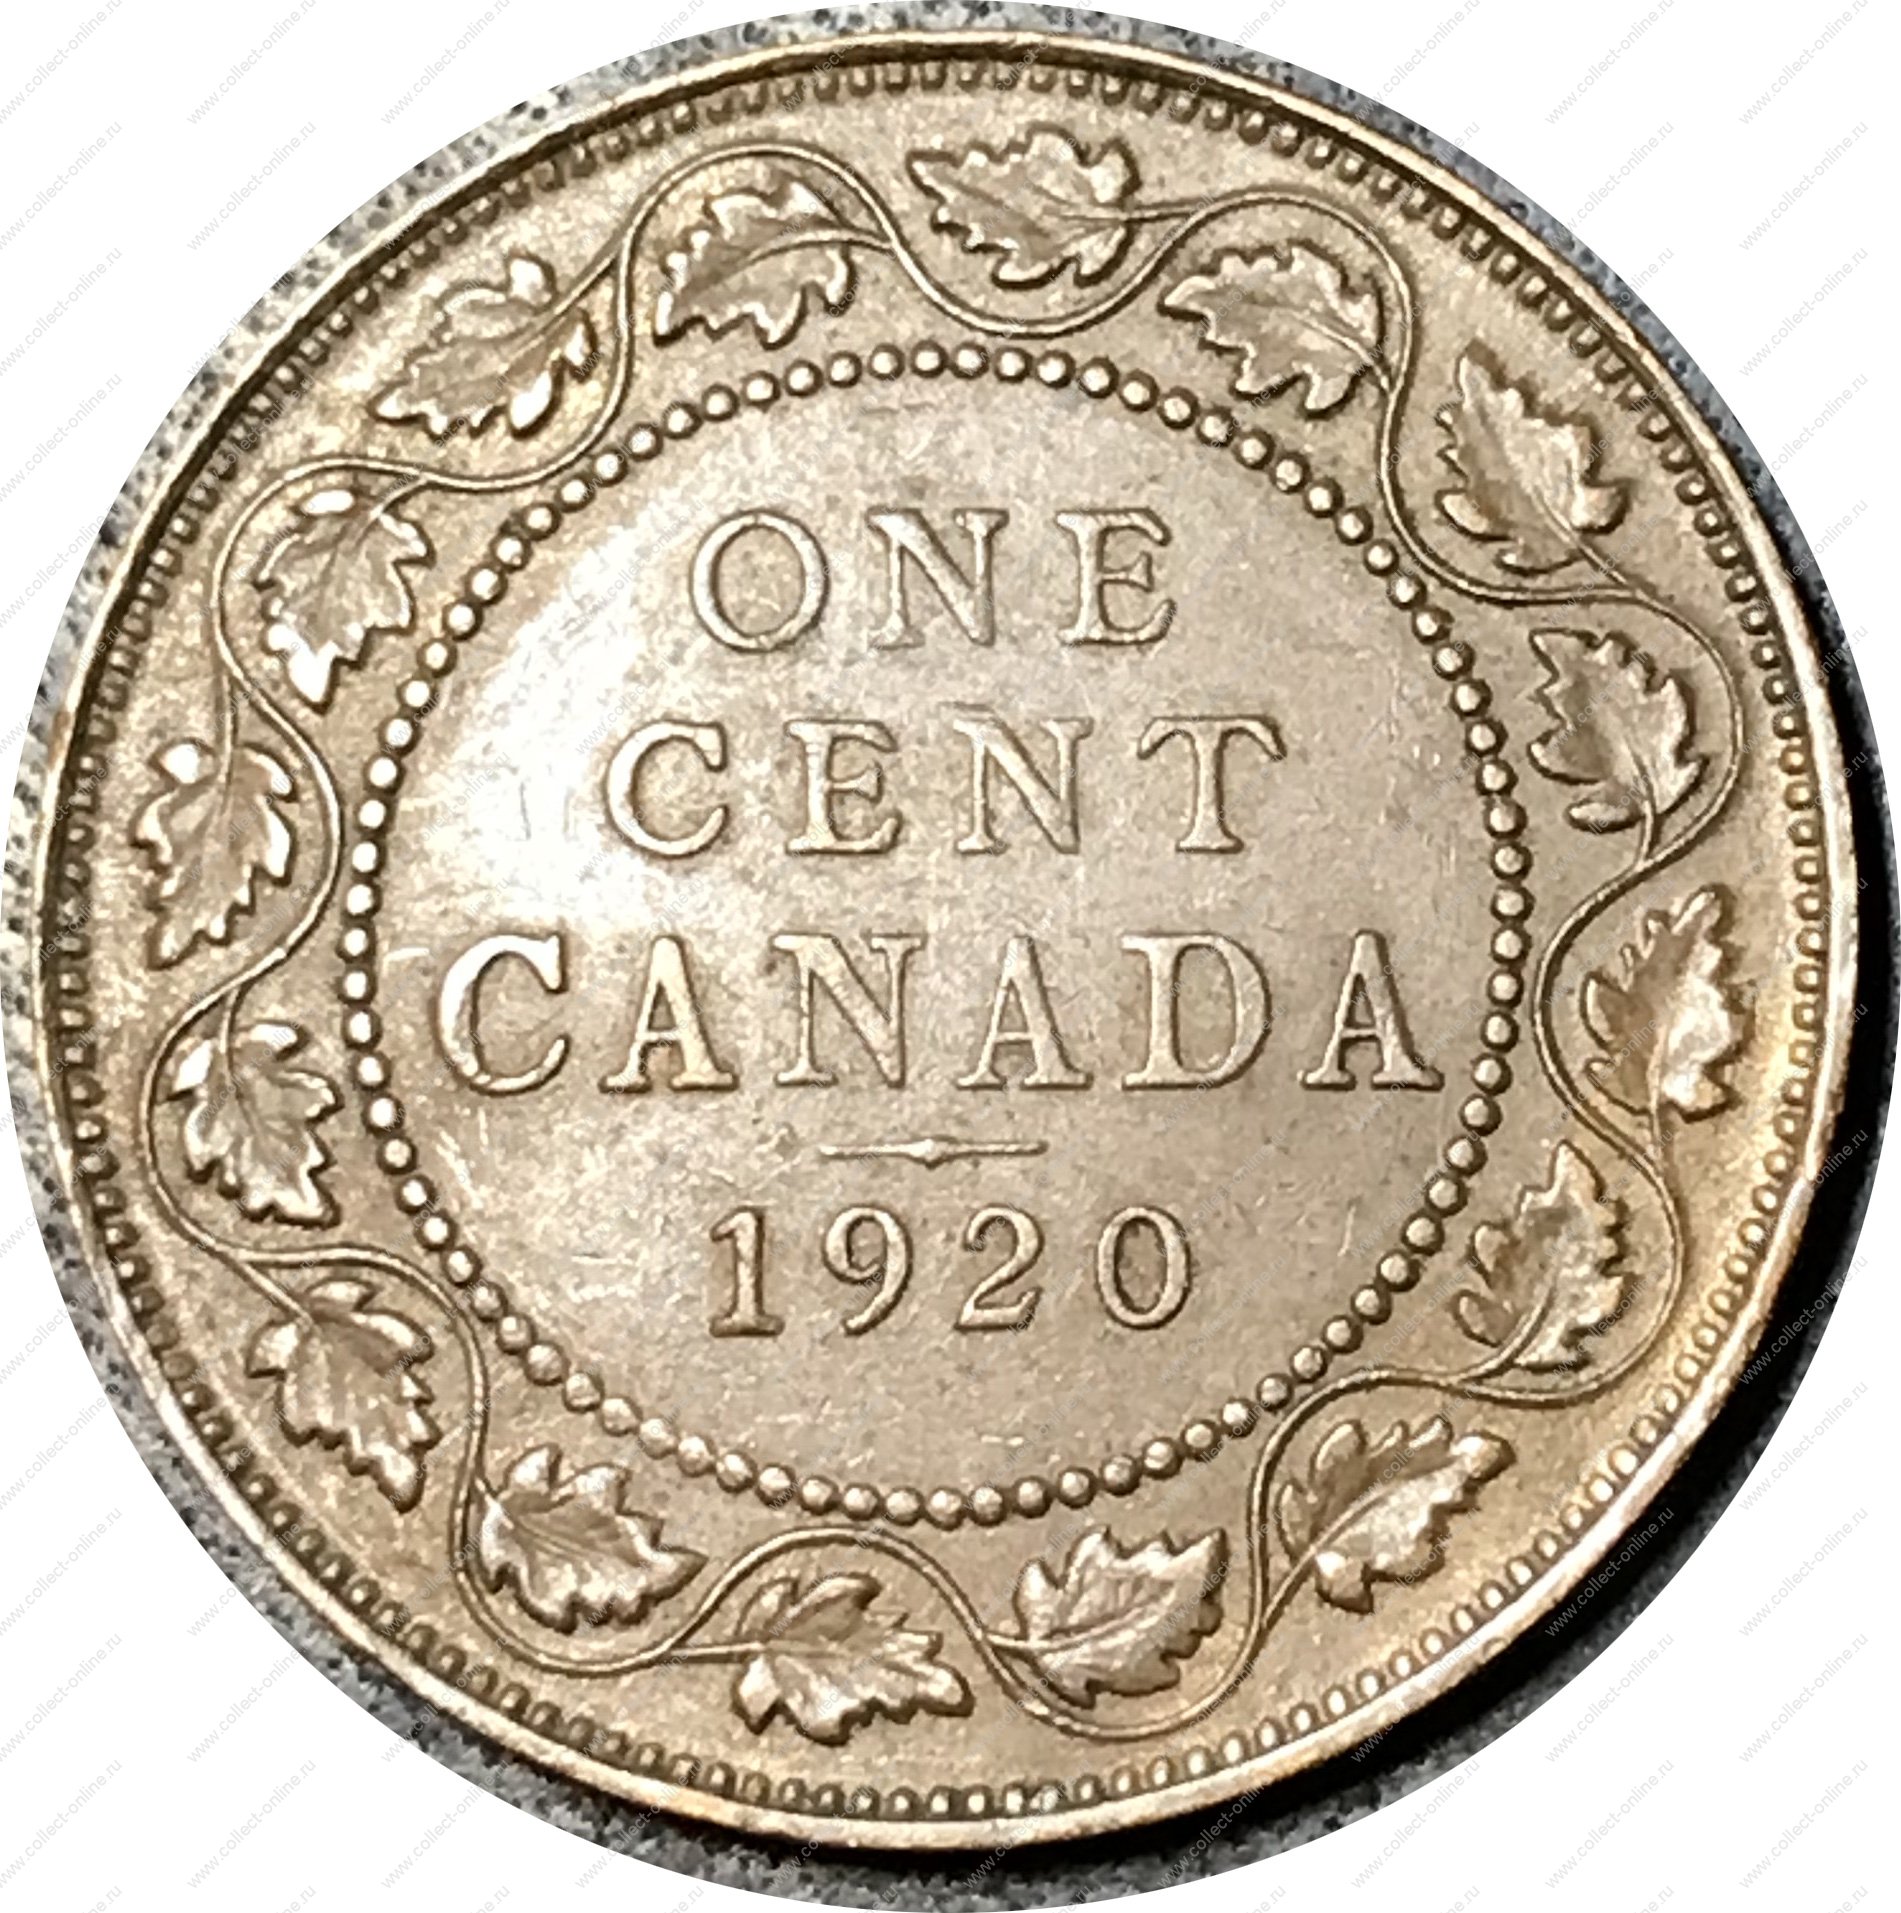 Канада в 1899. Канада 1900. Монета 1 рупия 1907г. 1 Цент купюра. Сайт коллекционеров монет